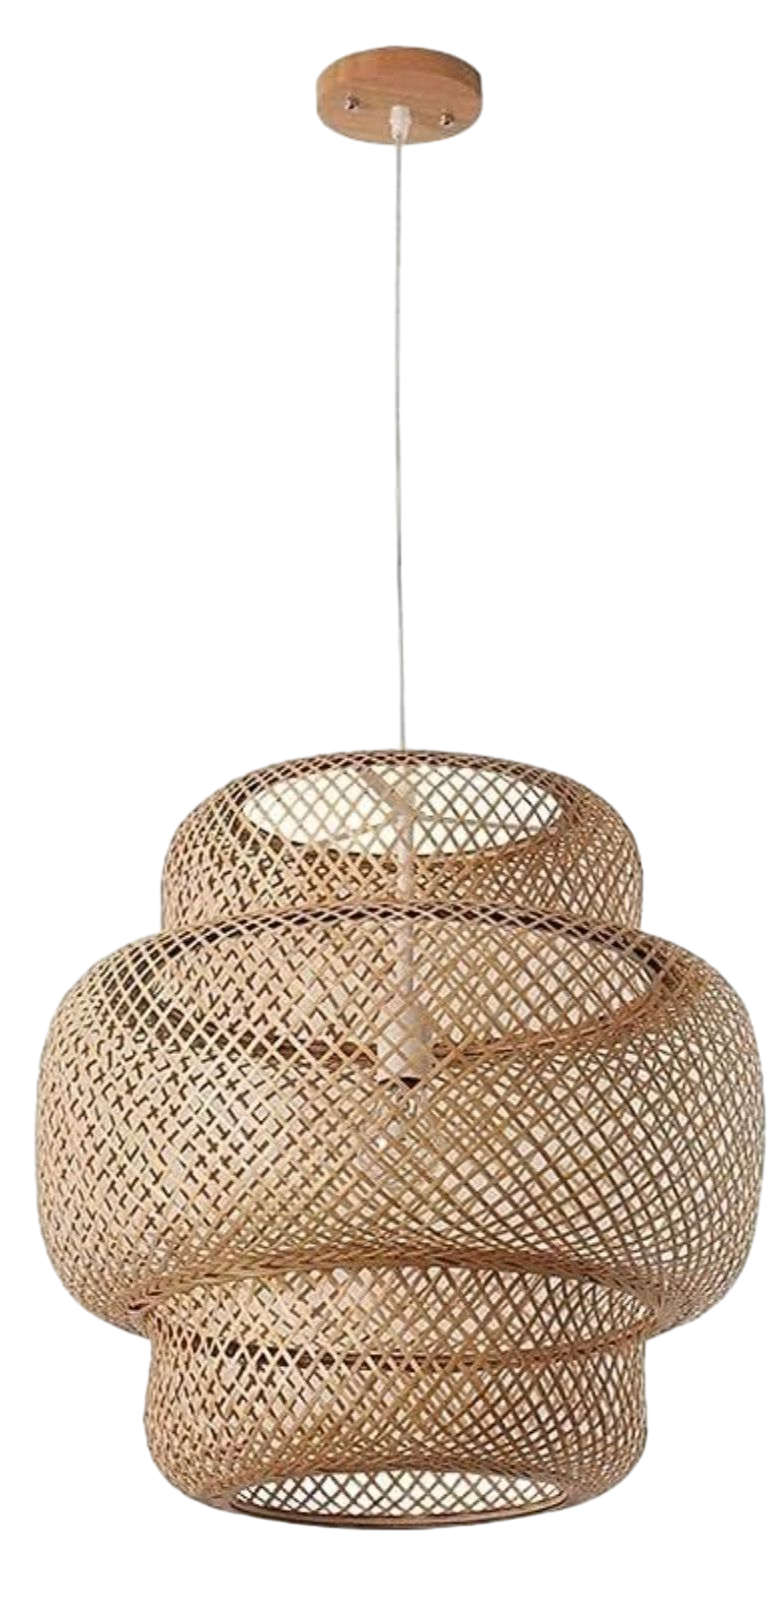 Amazon - DANGGEOI Hand-Woven Bamboo Pendant Light, Rattan Handwoven Pendant Lamp, Natural Chandeliers Domed Shape Woven Light 1 Light Hanging Light for Kitchen Farmhouse Beige (14.96 x 15.71inch)